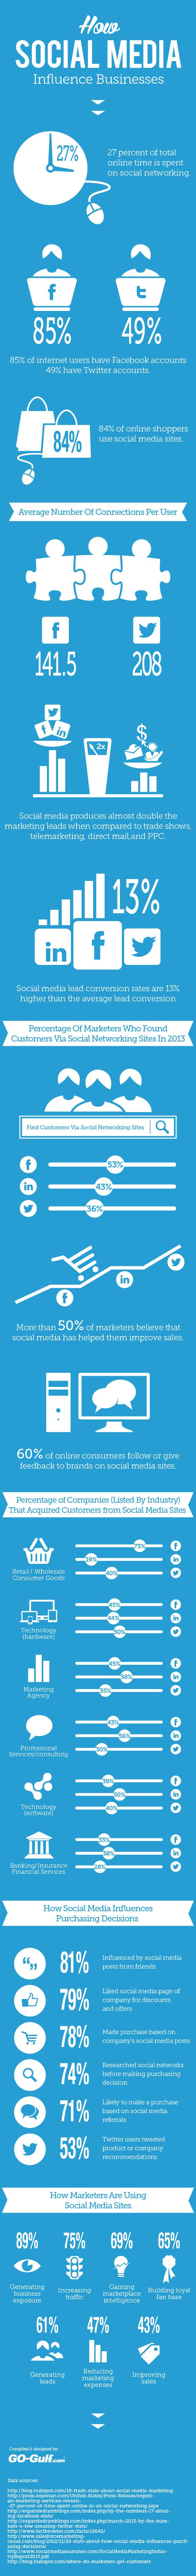 negocios social media infografia